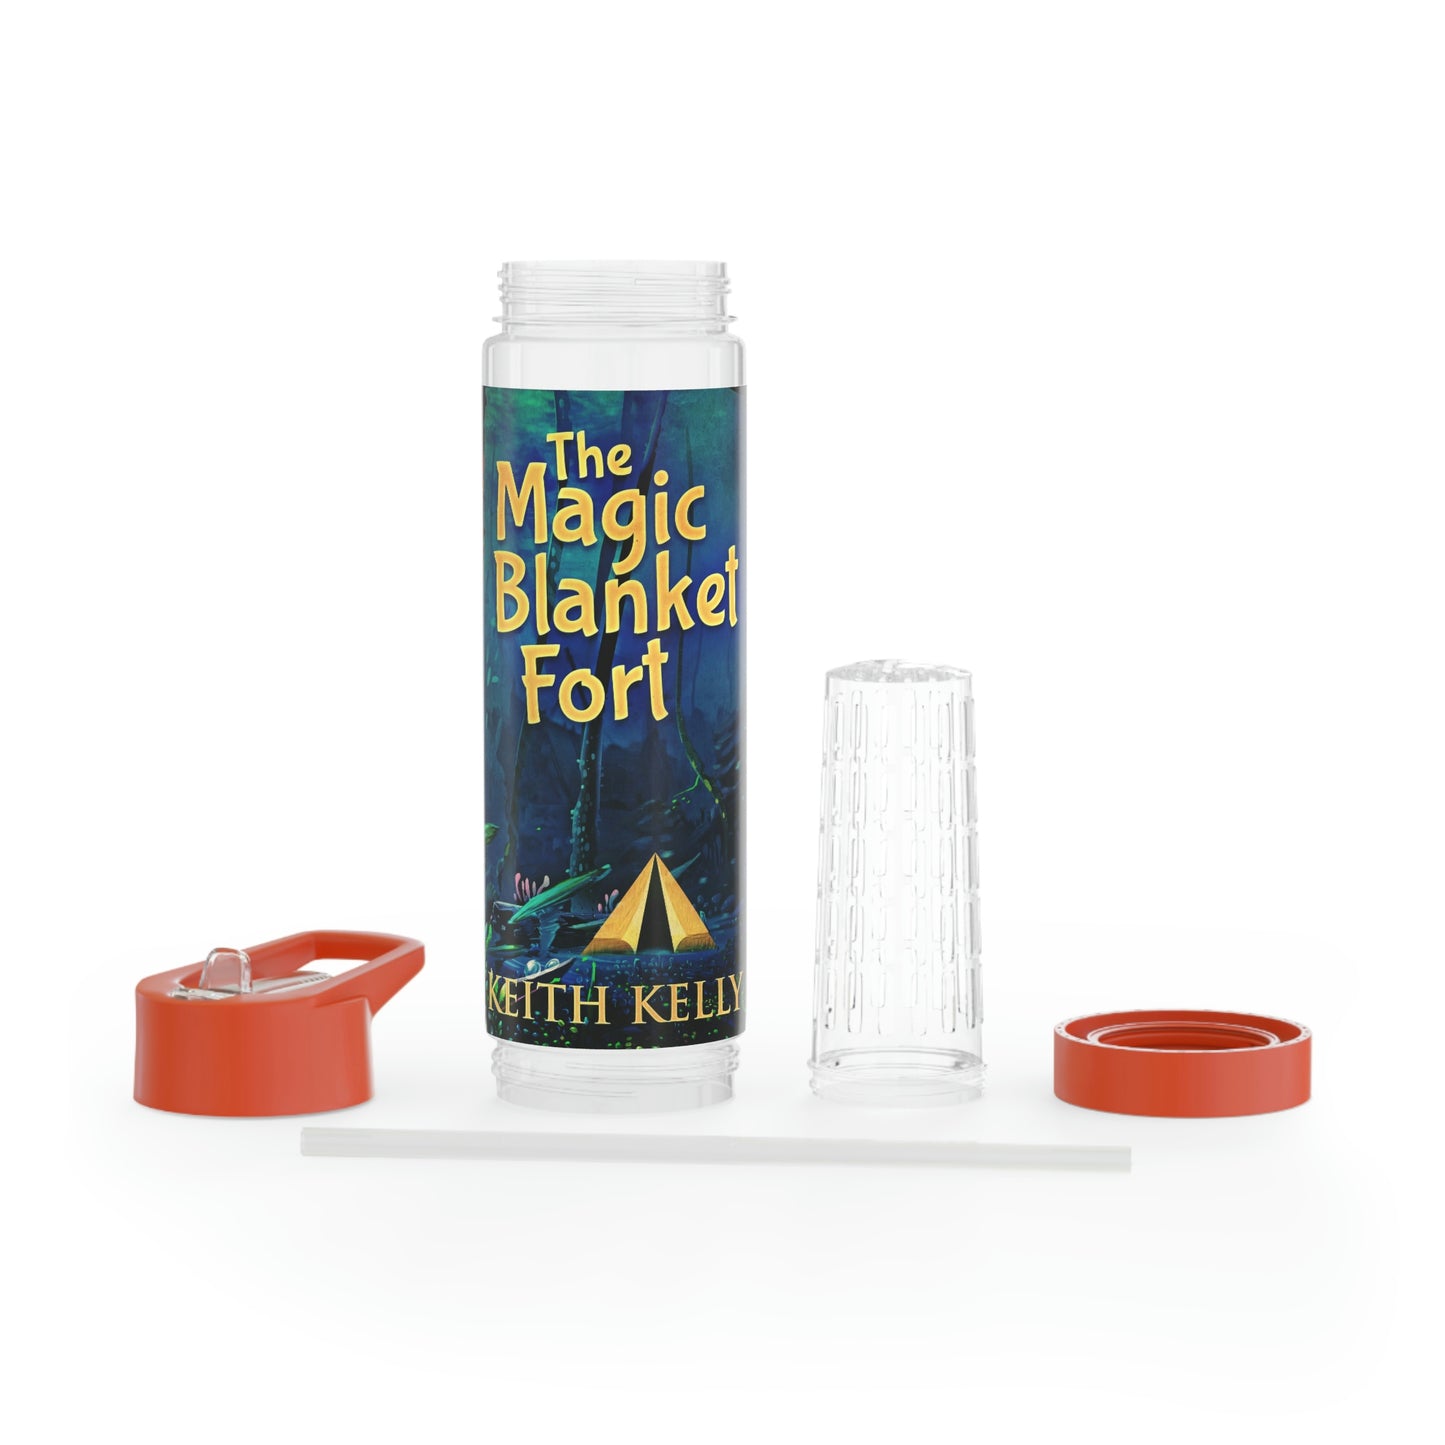 The Magic Blanket Fort - Infuser Water Bottle